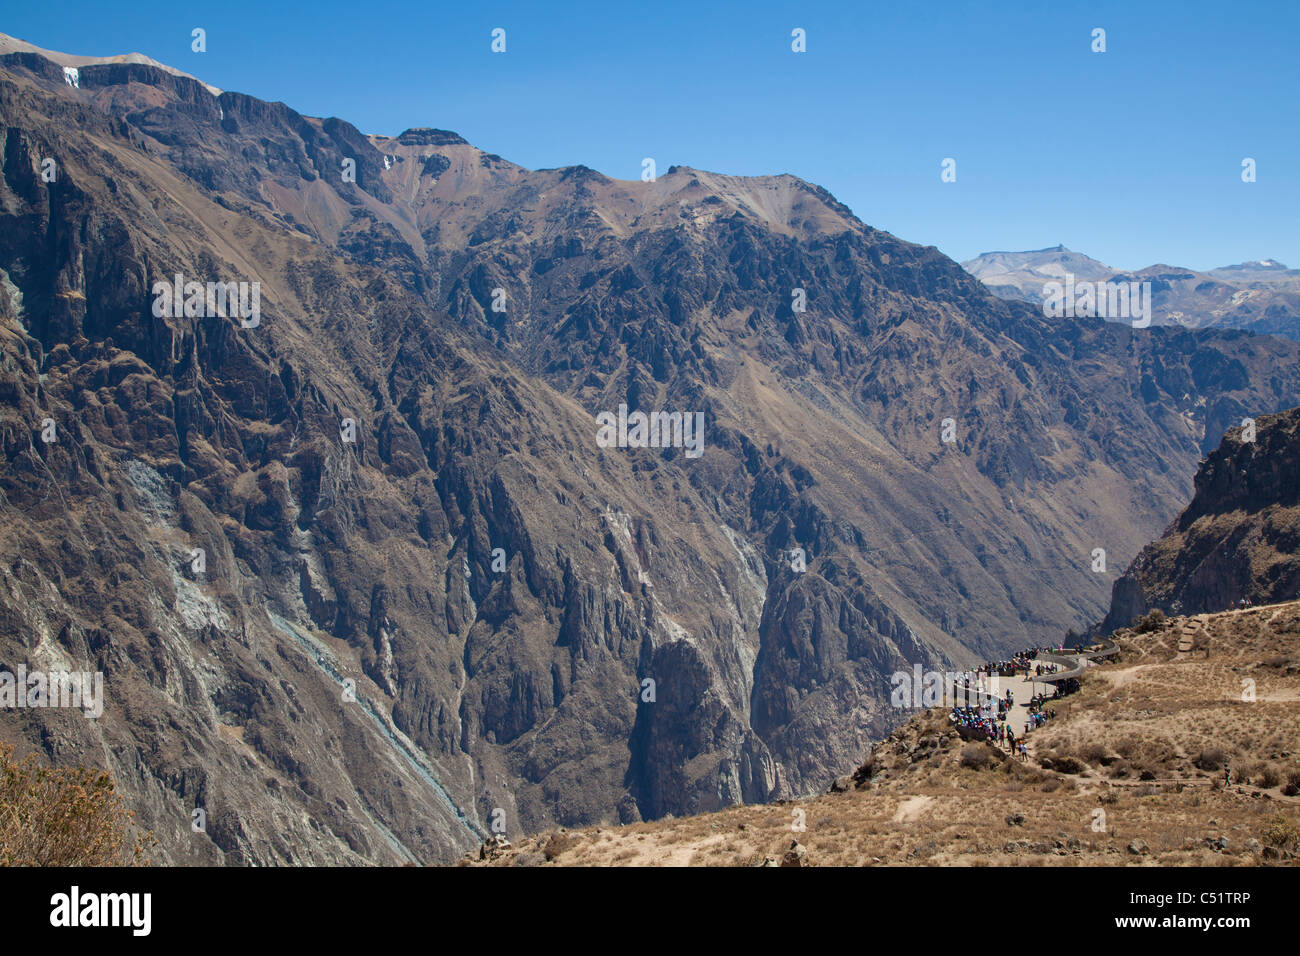 Les touristes à la vue, Cruz del Condor, Canyon de Colca, Pérou Banque D'Images